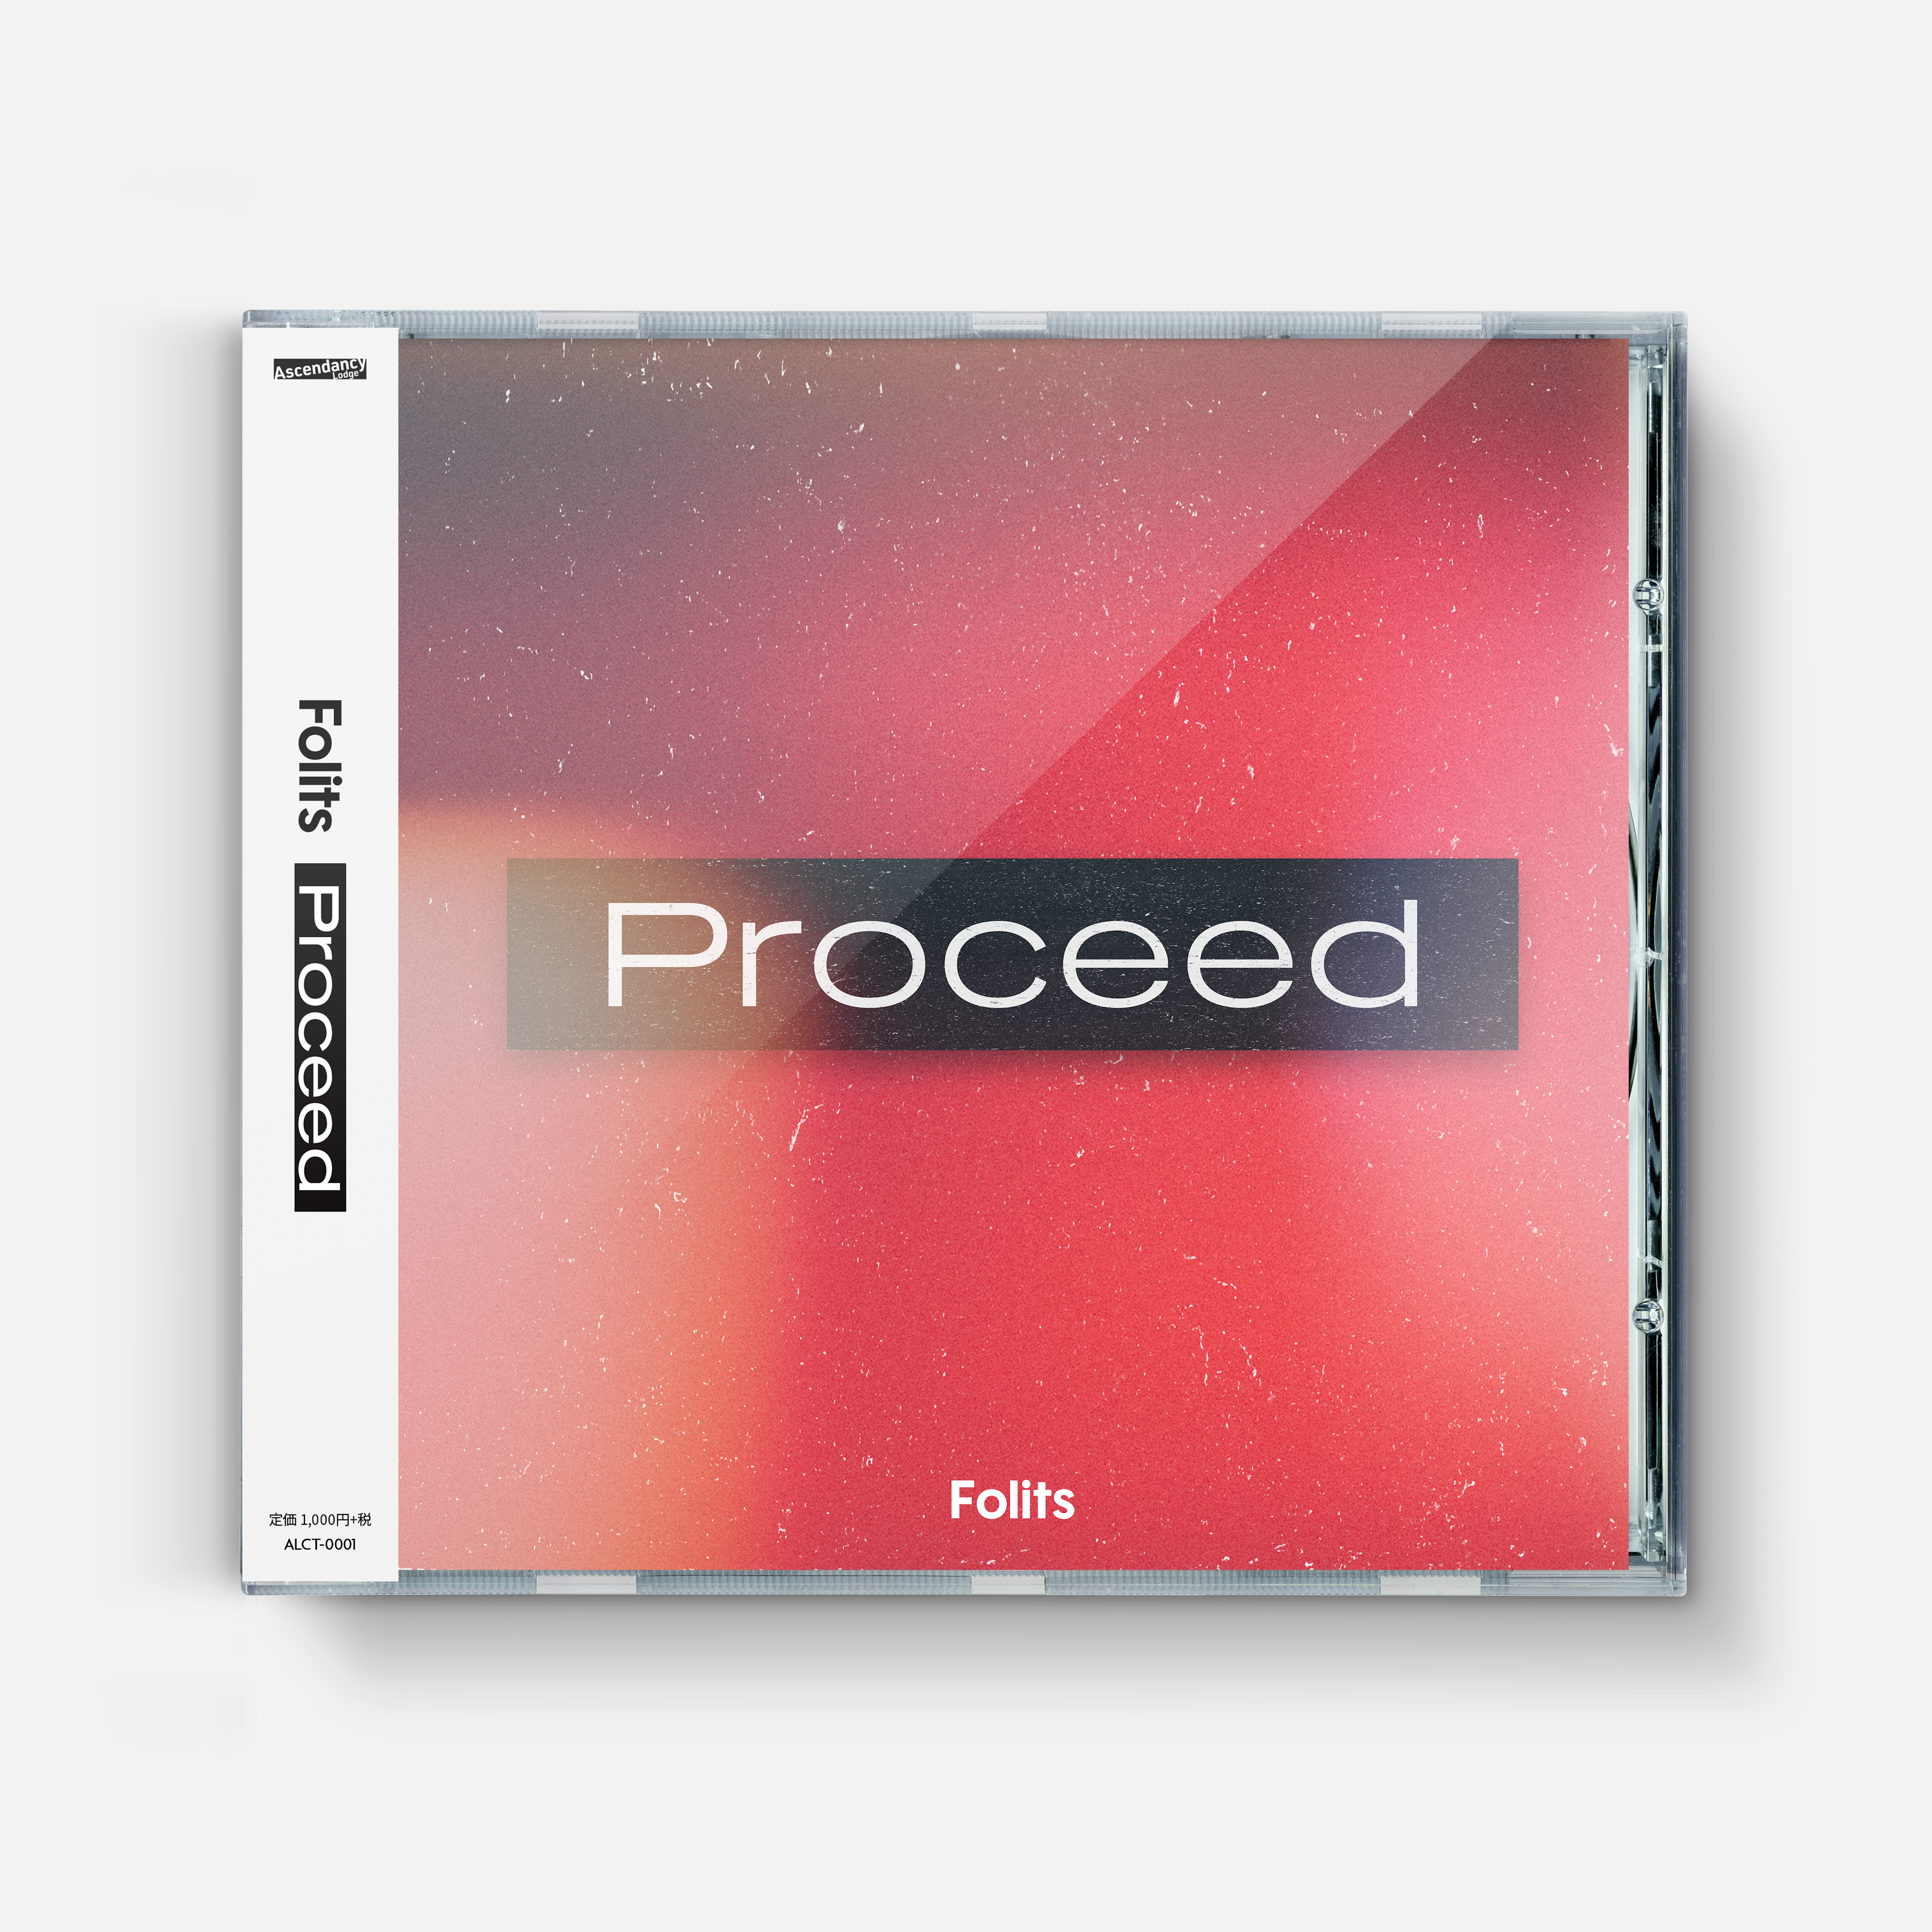 [CD Single] Folits - Proceed